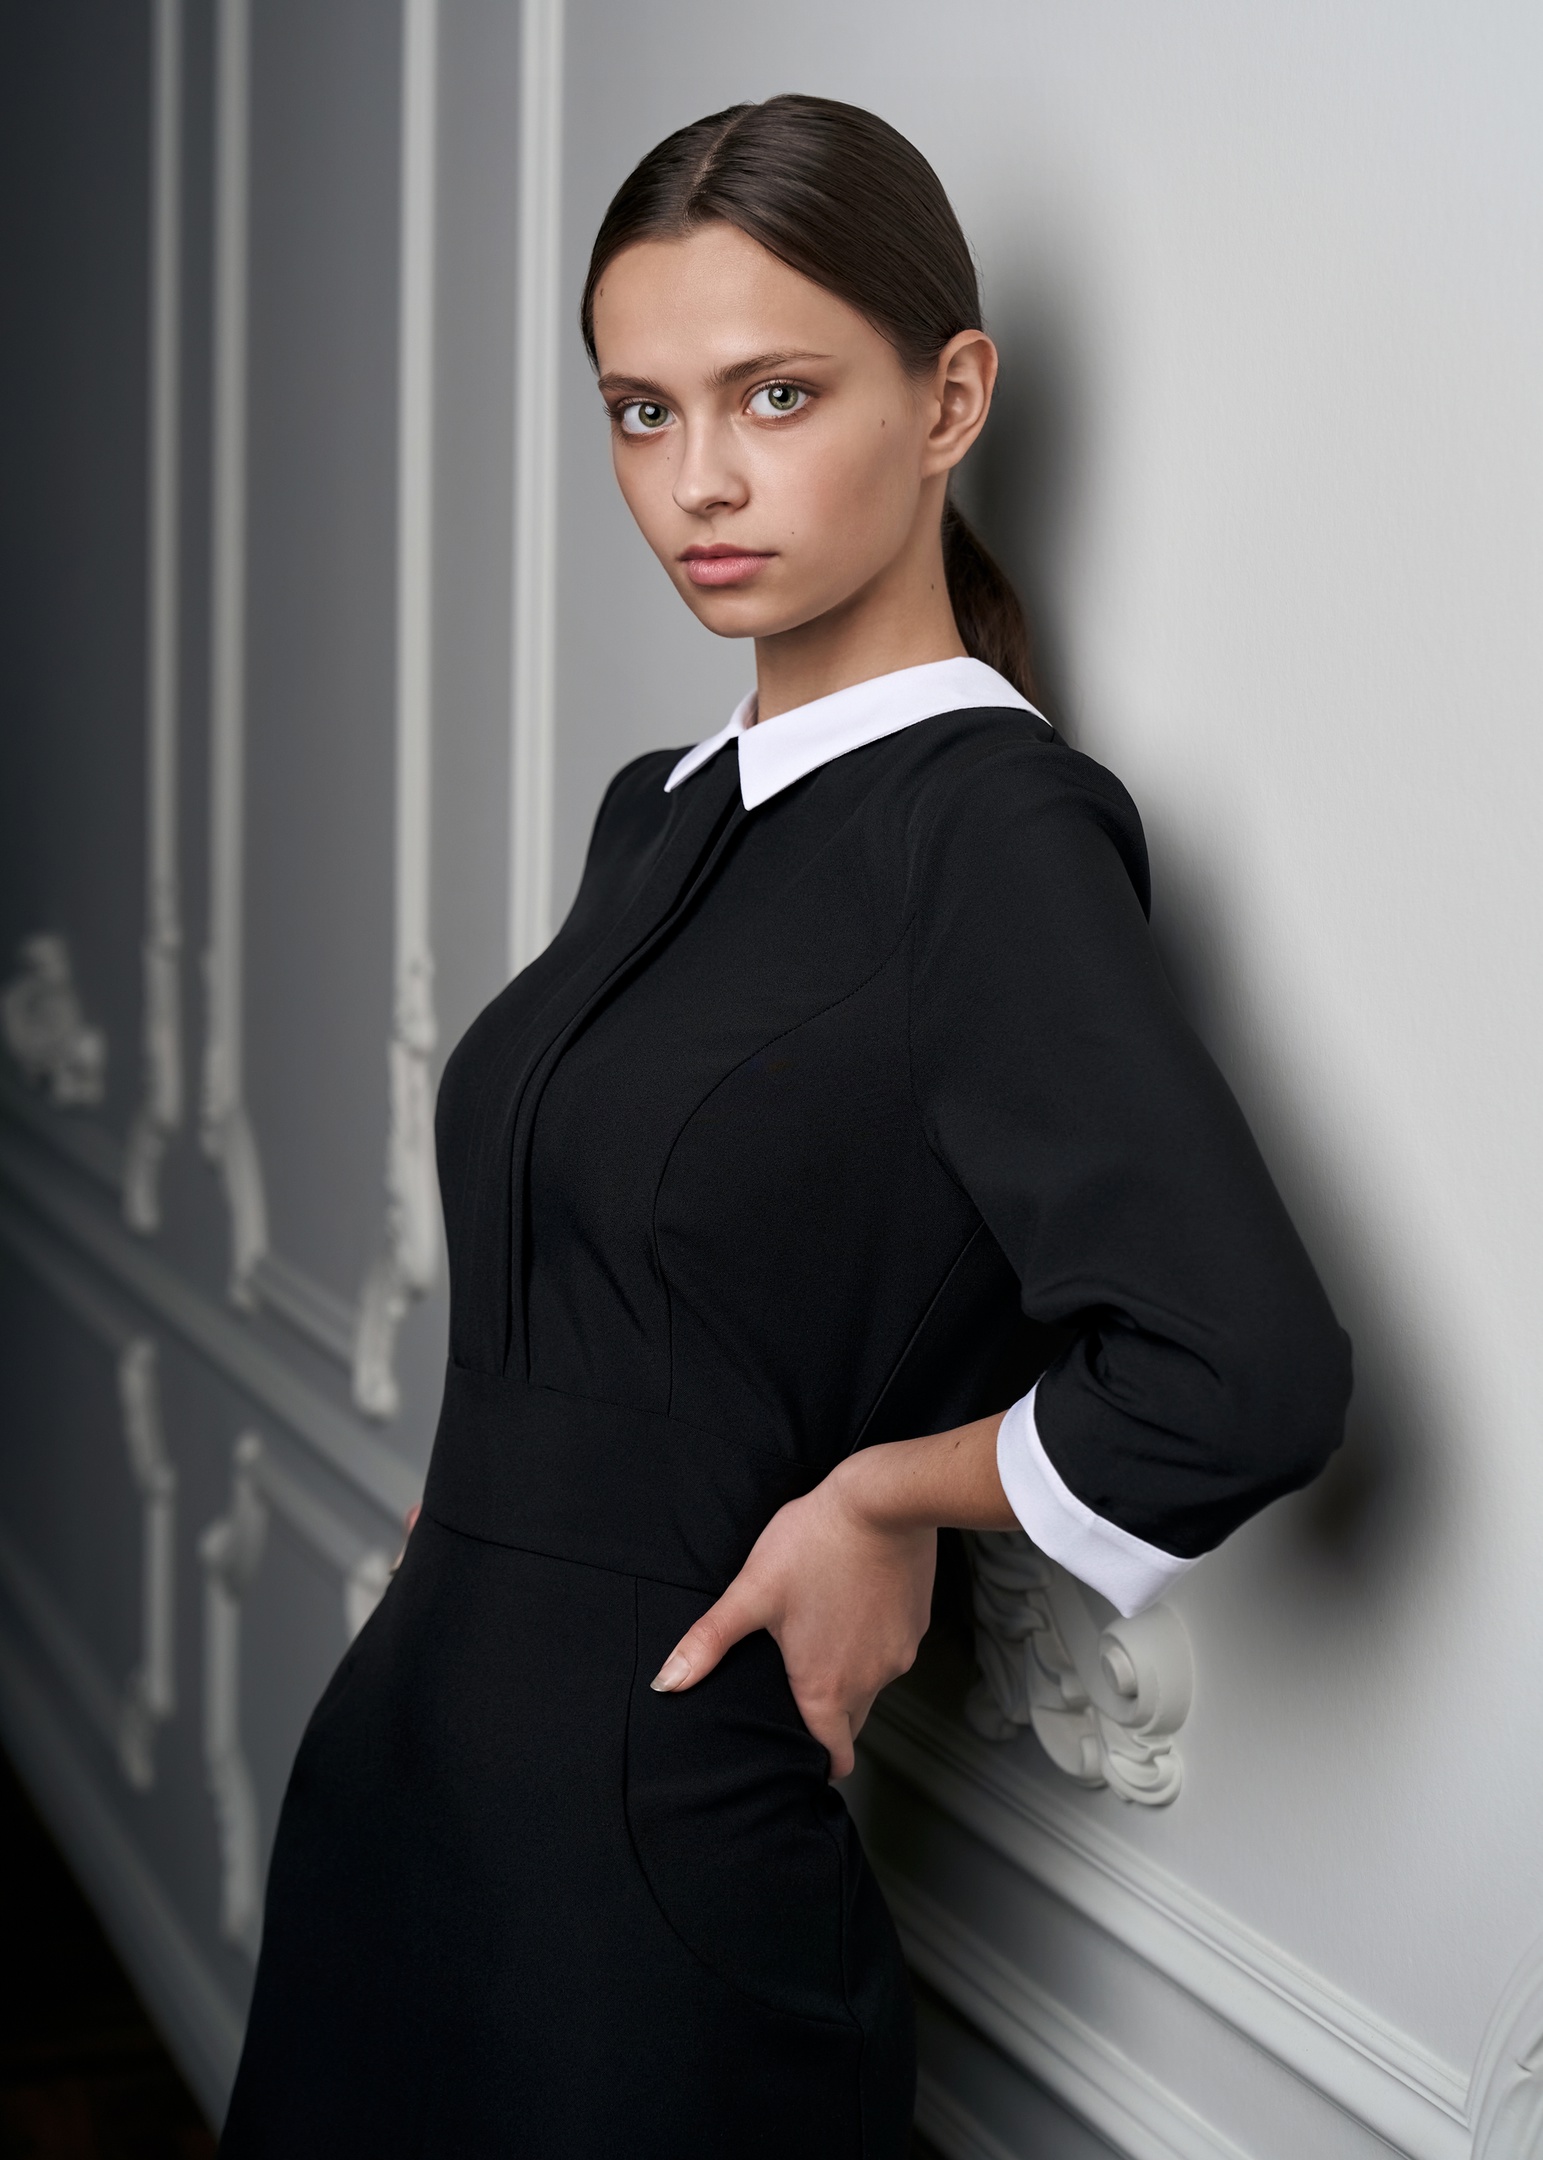 Sergey Gorshenin Women Lera Rubtsova Brunette Ponytail Looking At Viewer Black Clothing Wall Dress 1543x2160